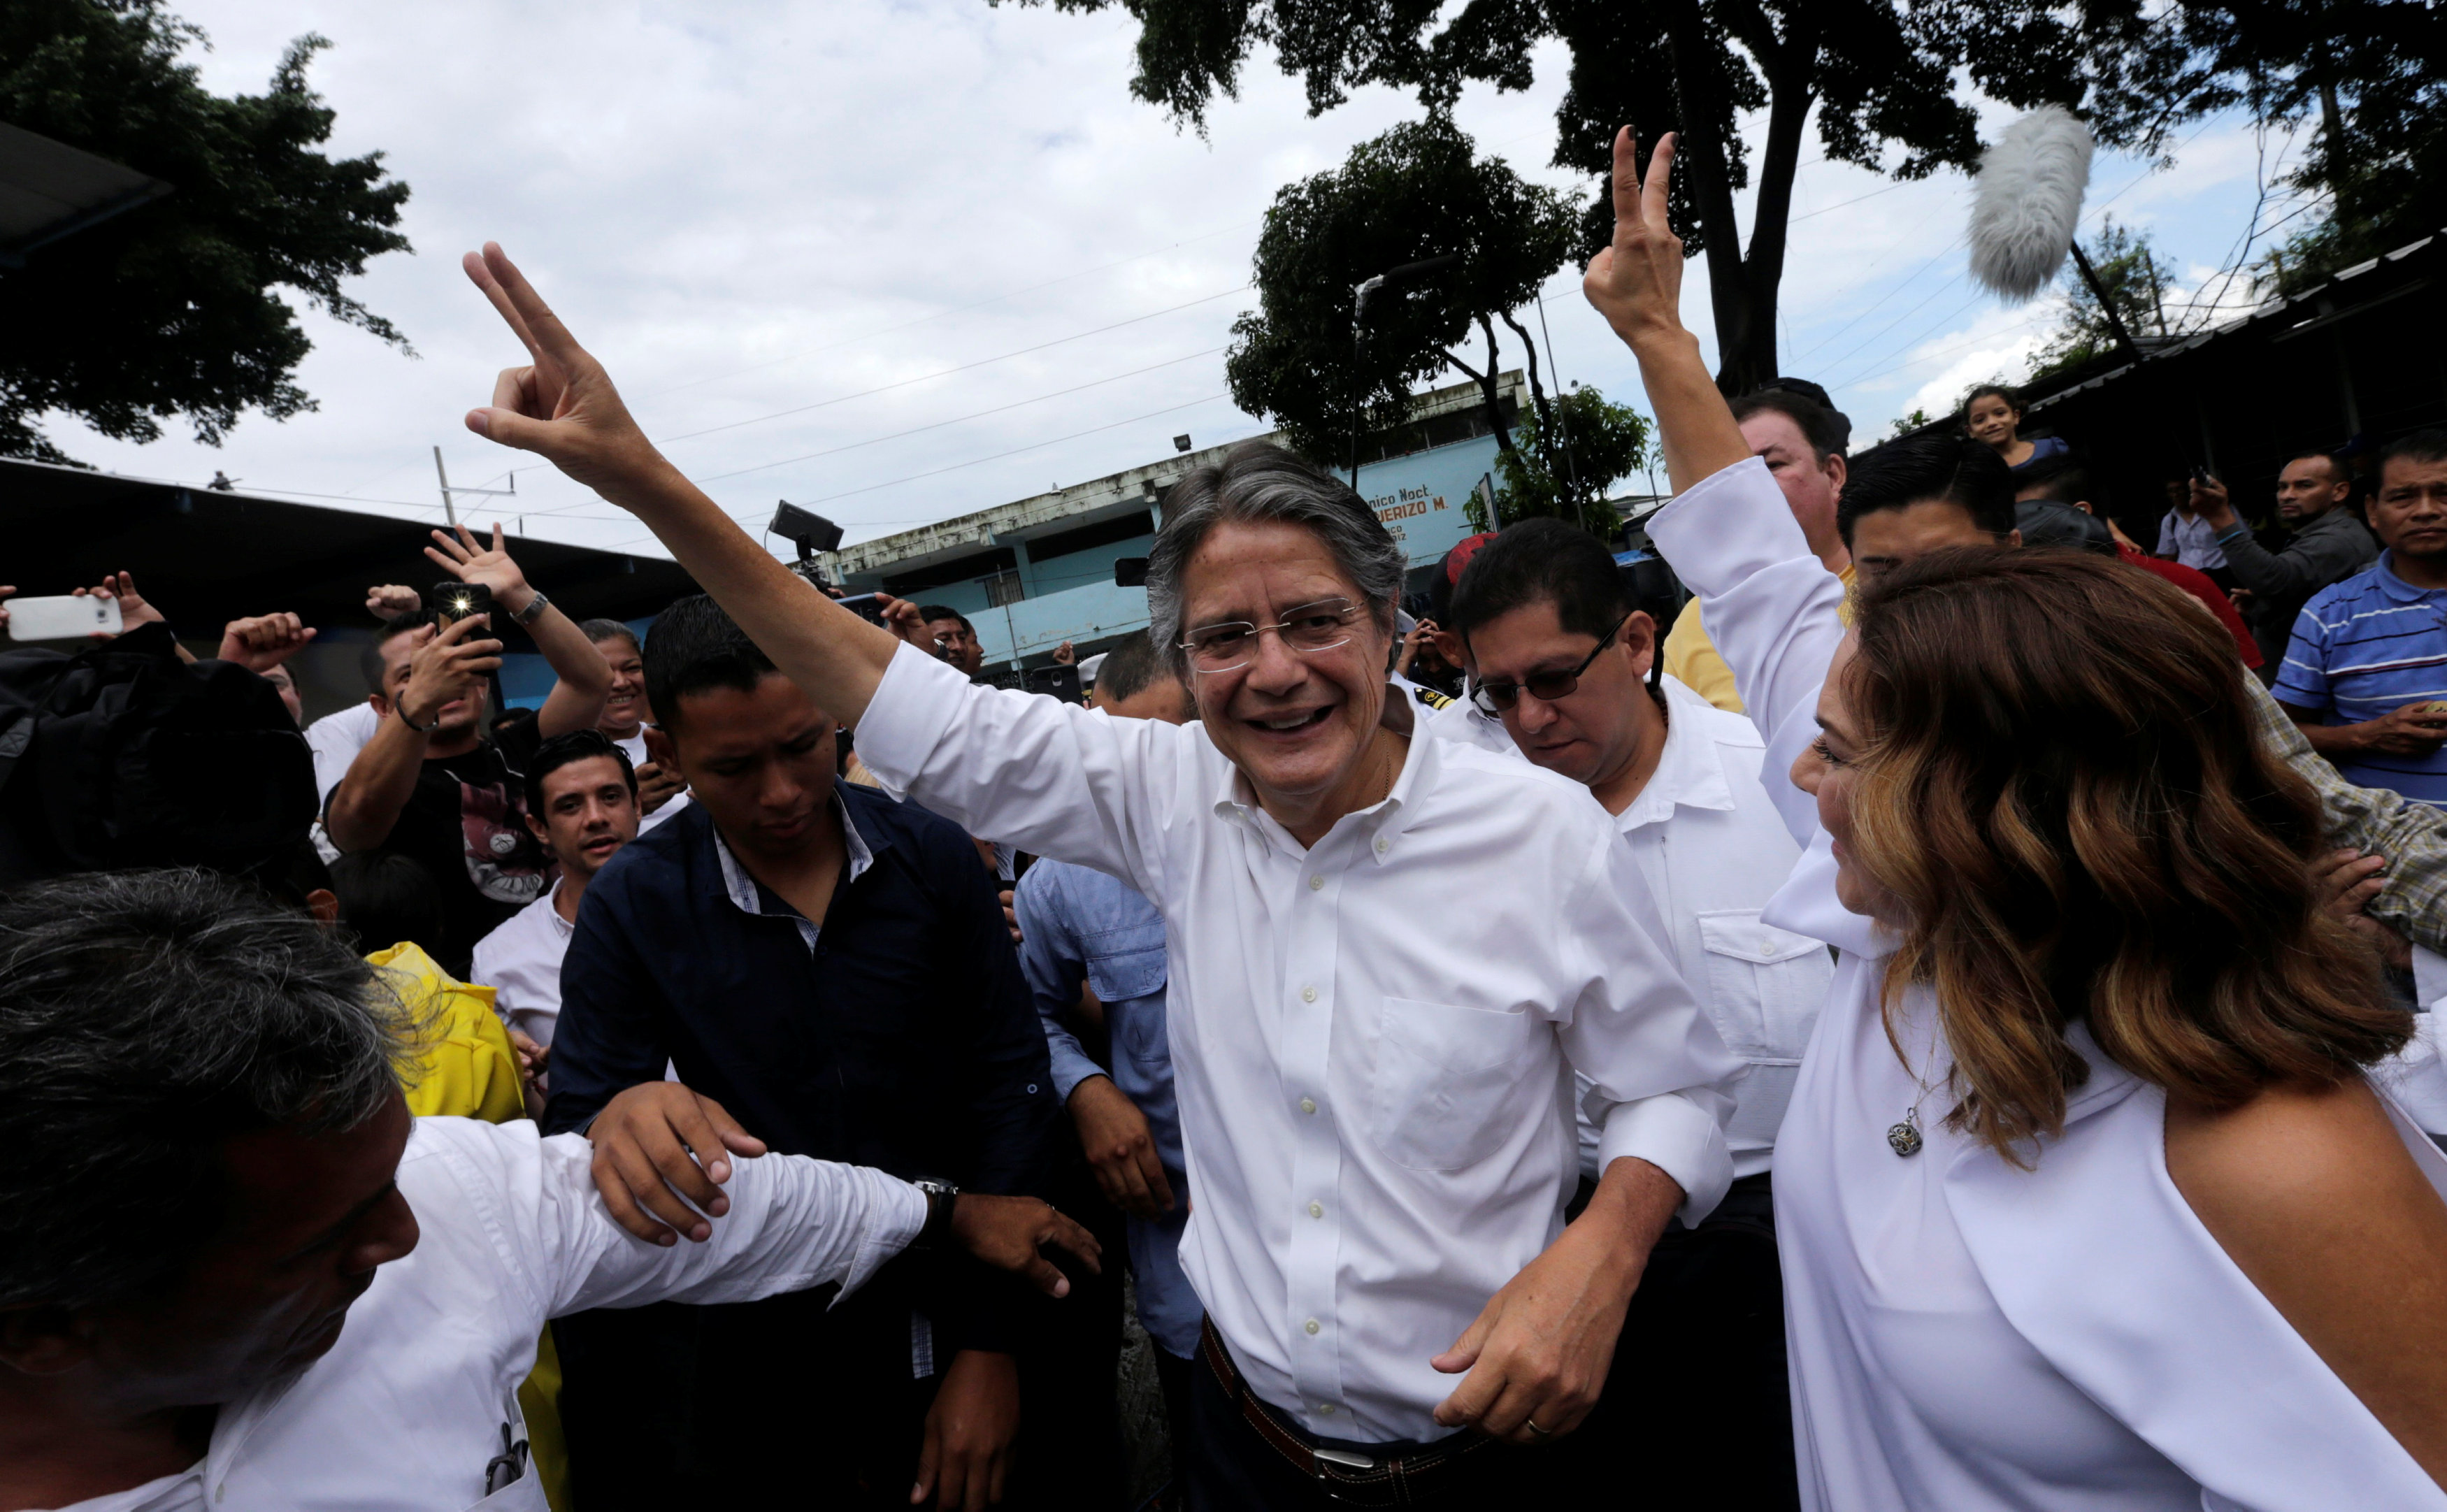 Candidato opositor Lasso insta a votar “en paz” en día “crucial” para Ecuador